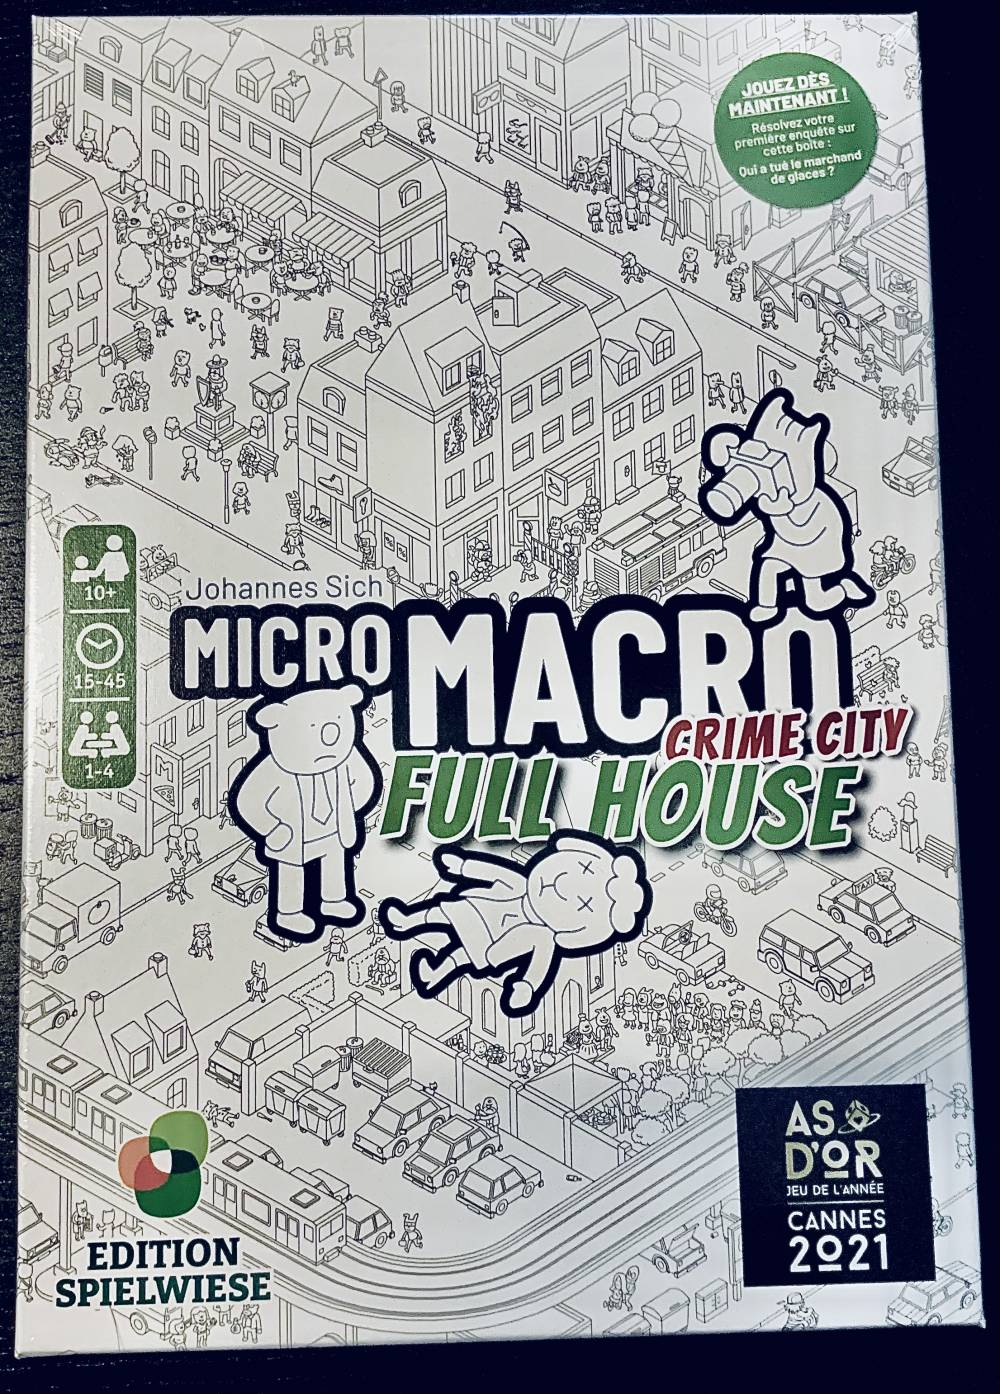 Micro macro crime city Full house